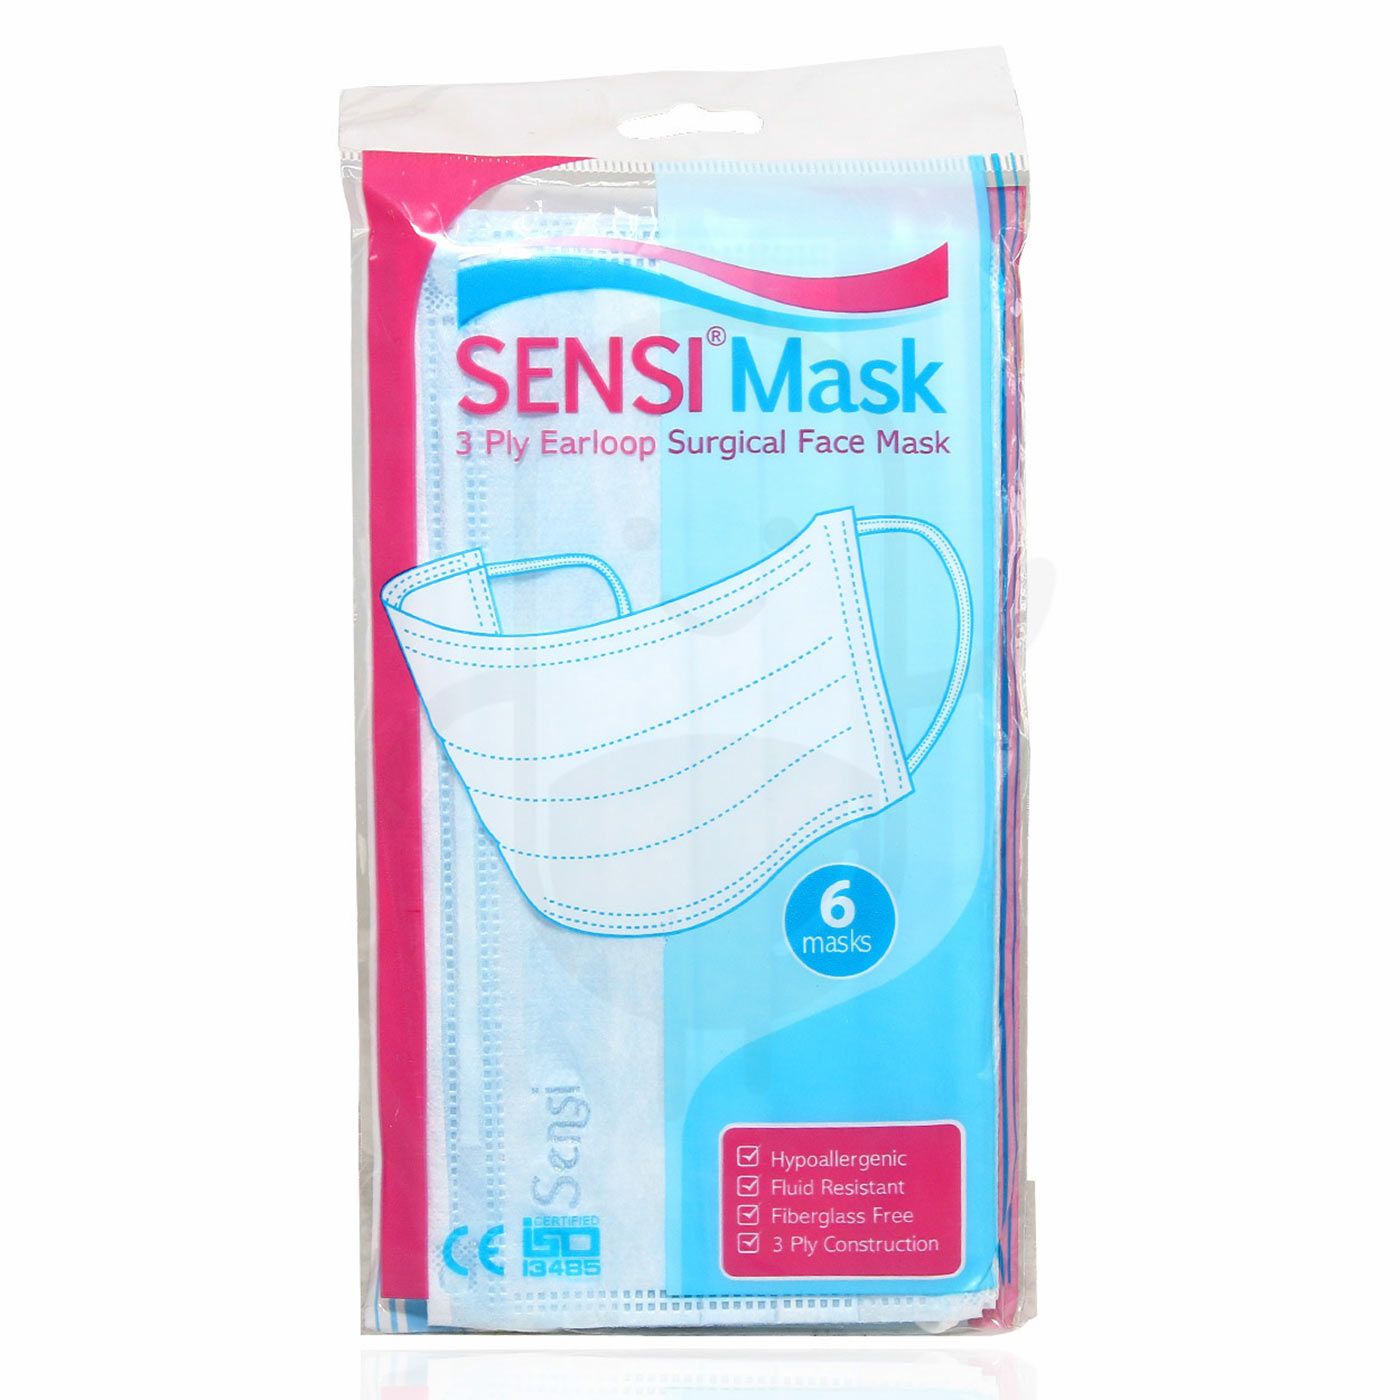 Sensi Mask Earloop - SB4/6 - 1